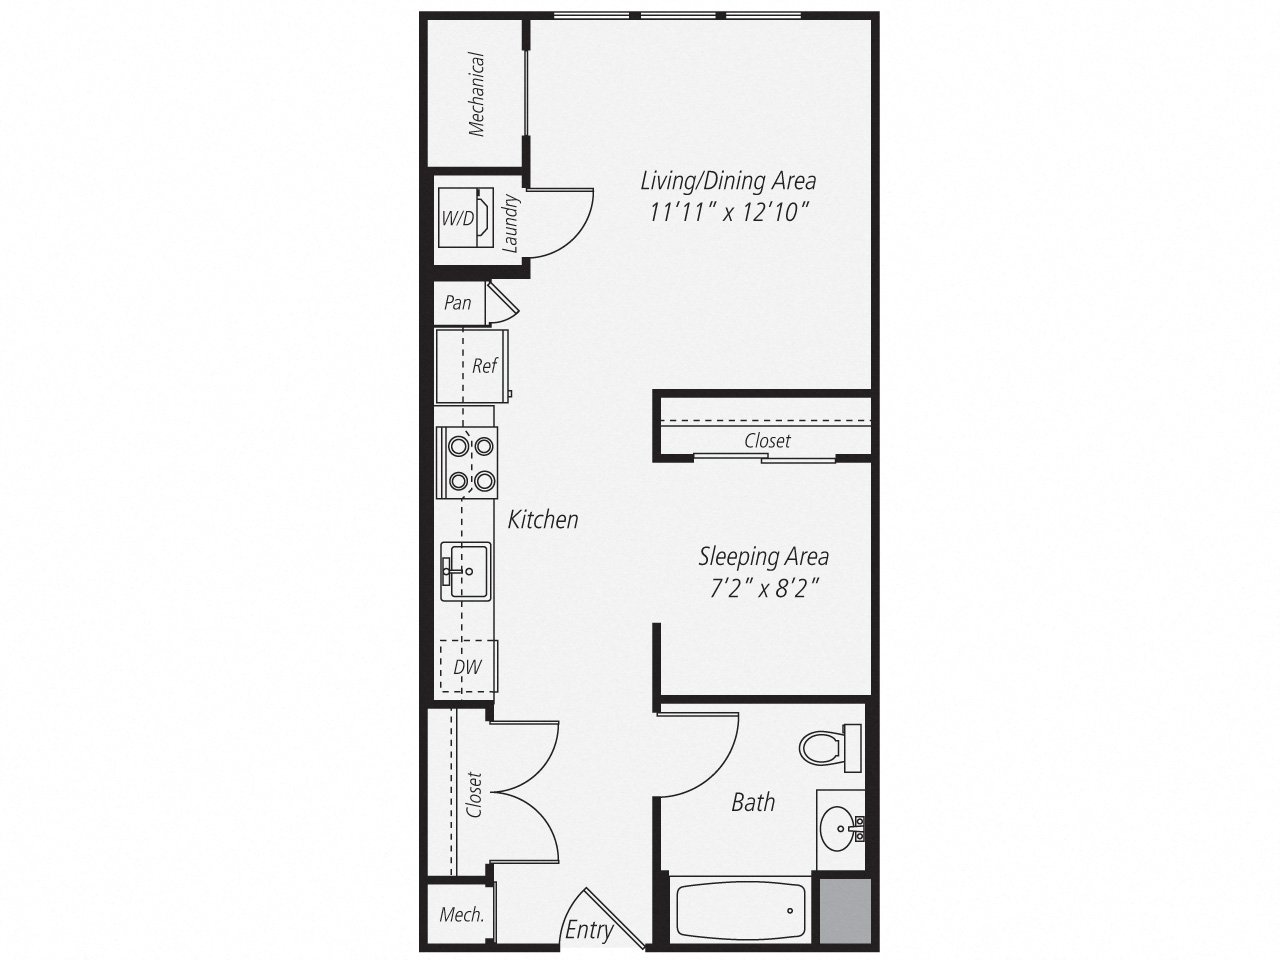 Floorplan for Apartment #136, 0 bedroom unit at Halstead Norwalk